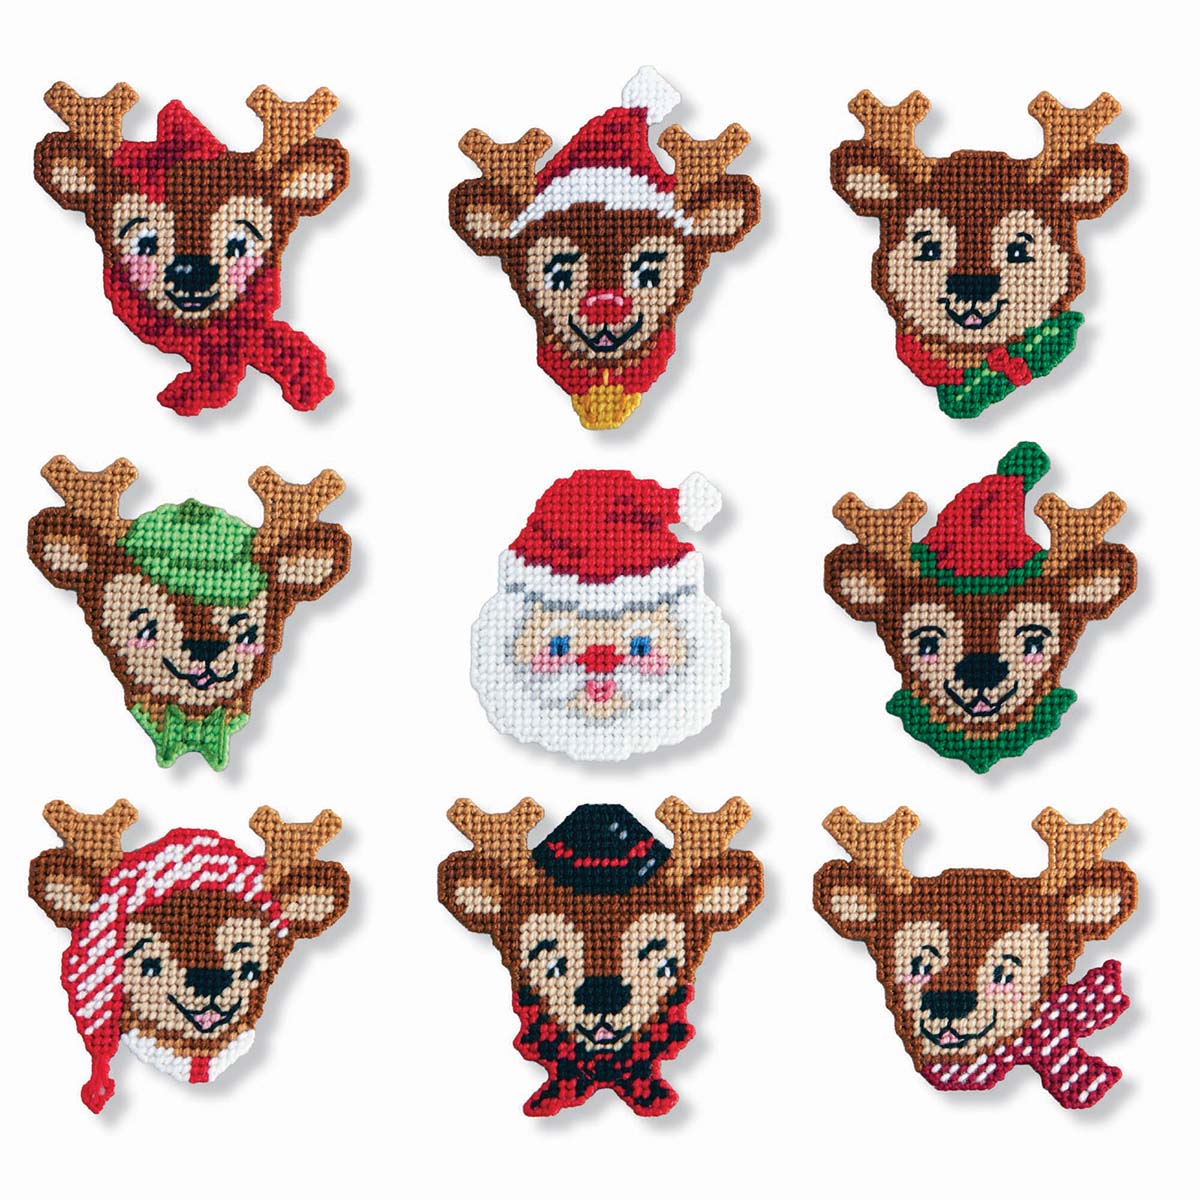 Herrschners Santa & Reindeer Ornaments Plastic Canvas Kit